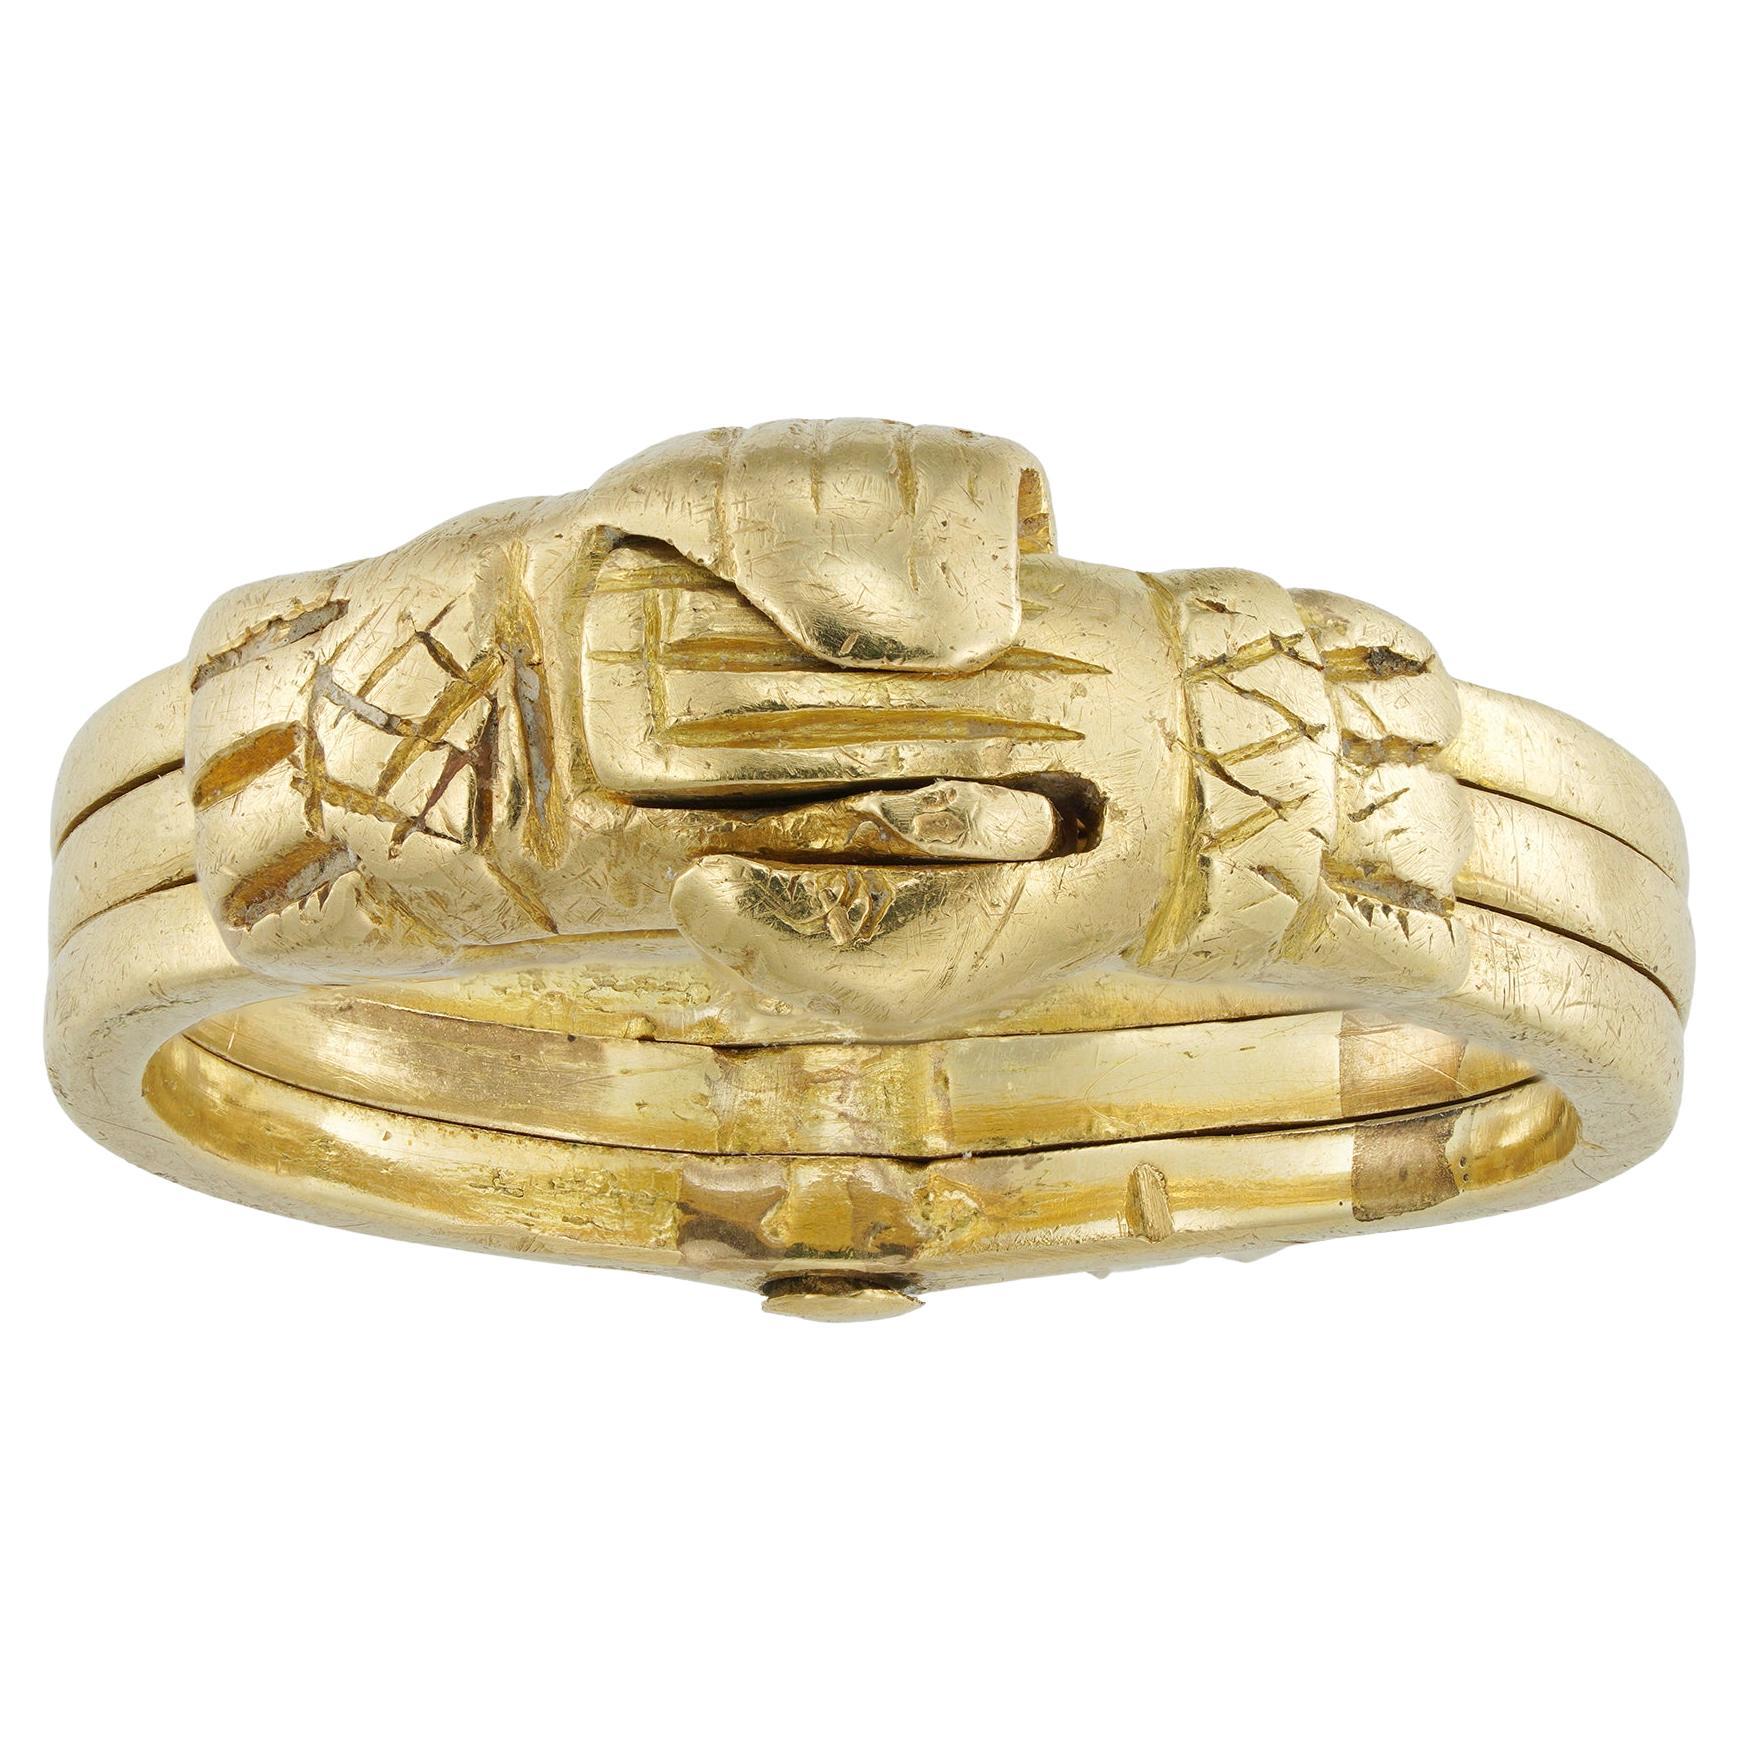 An 18th century gold gimmel ring